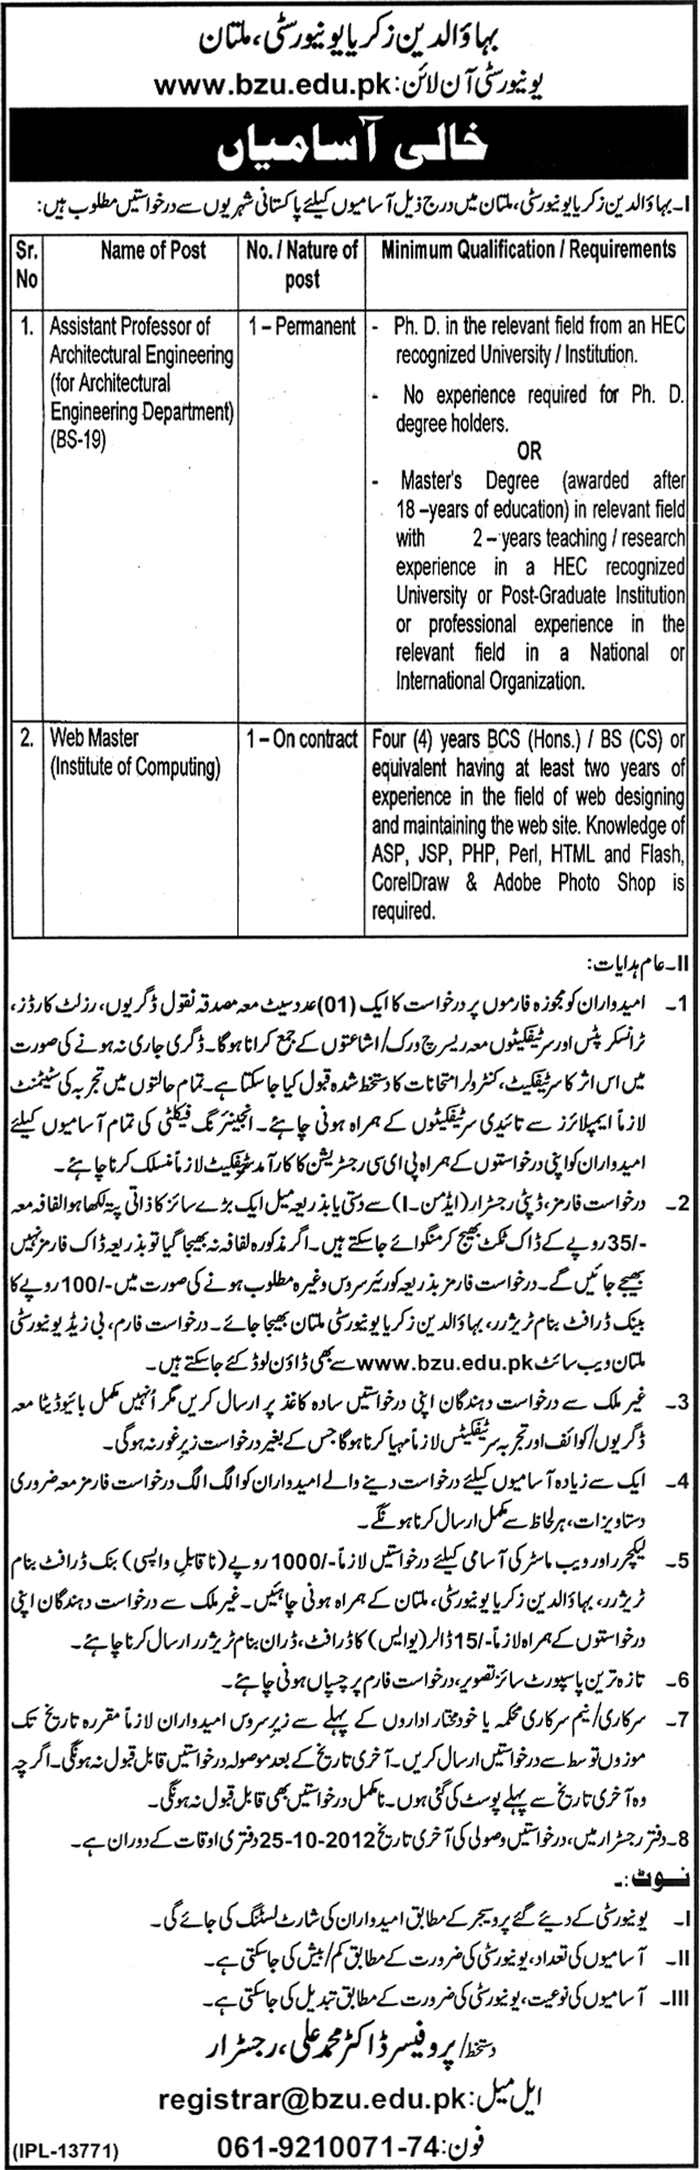 Jobs in Bahauddin Zakariya (BZU) University, Multan